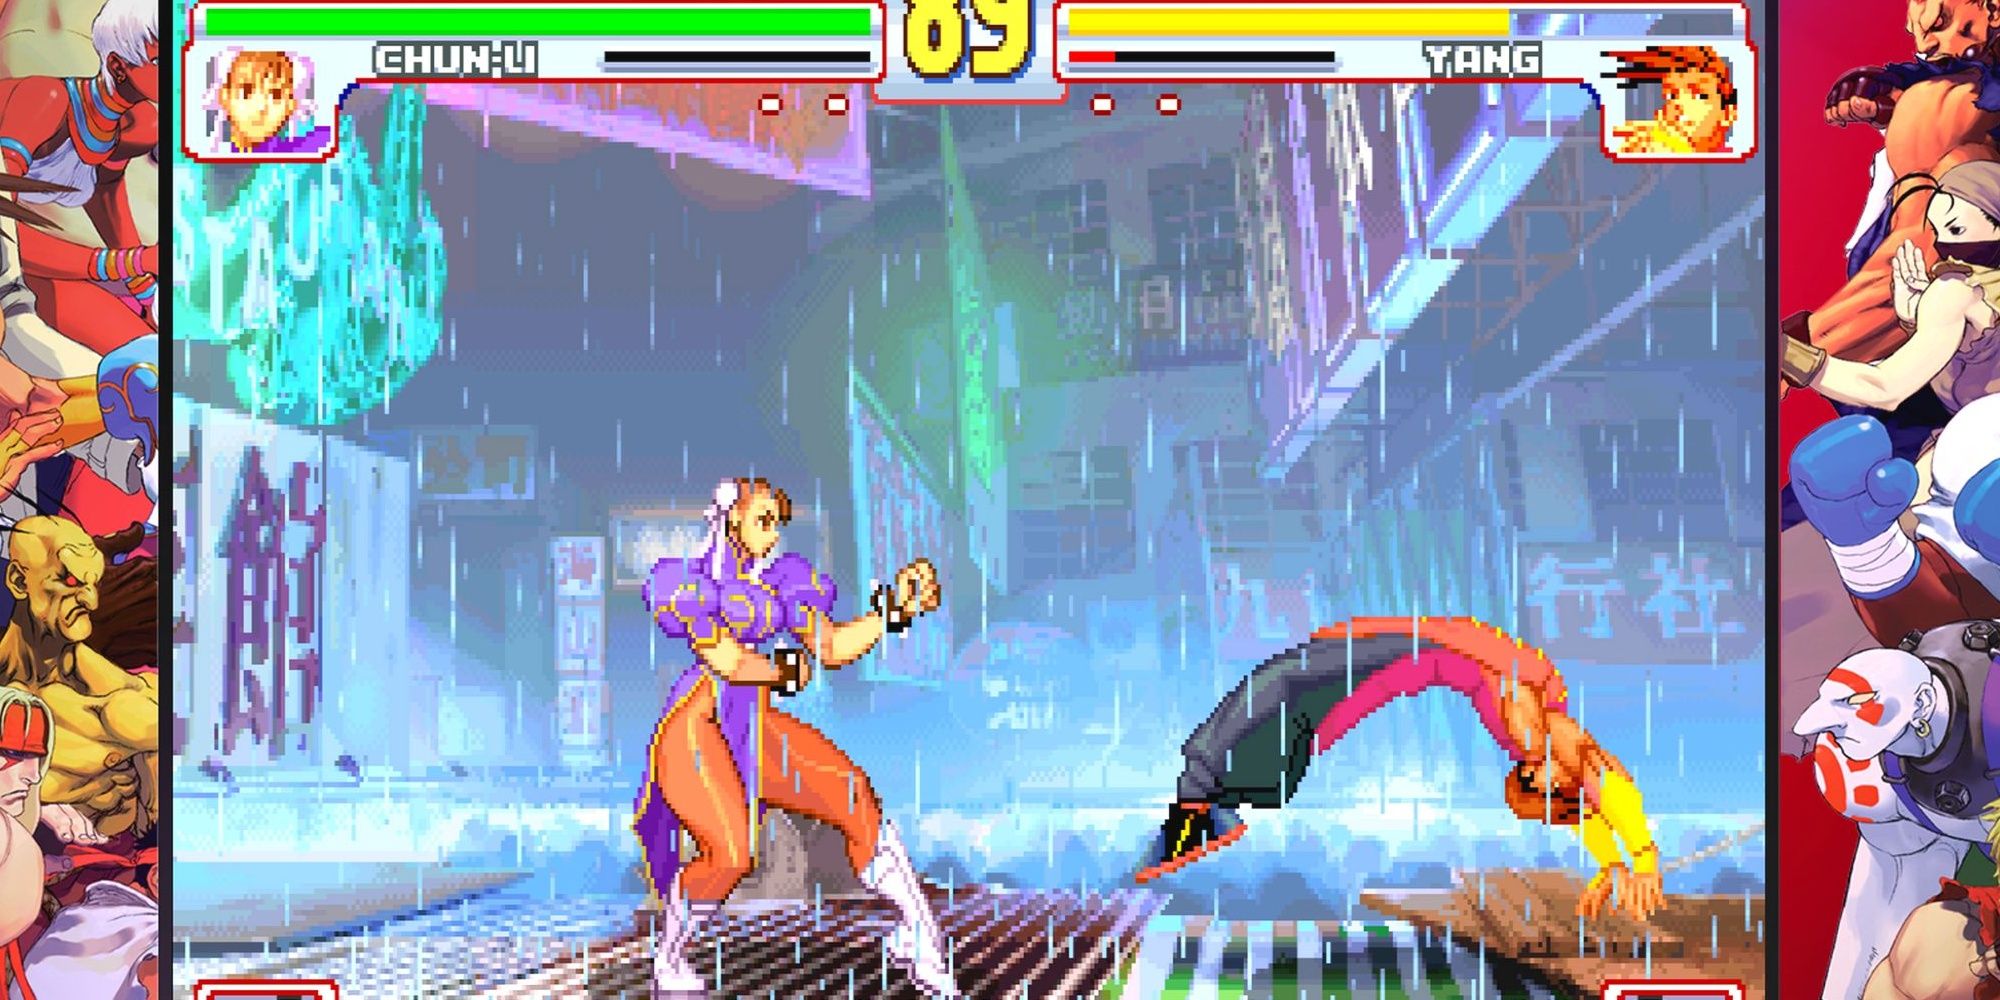 Chun-Li fighting Yang from Street Fighter 3: Third Strike.